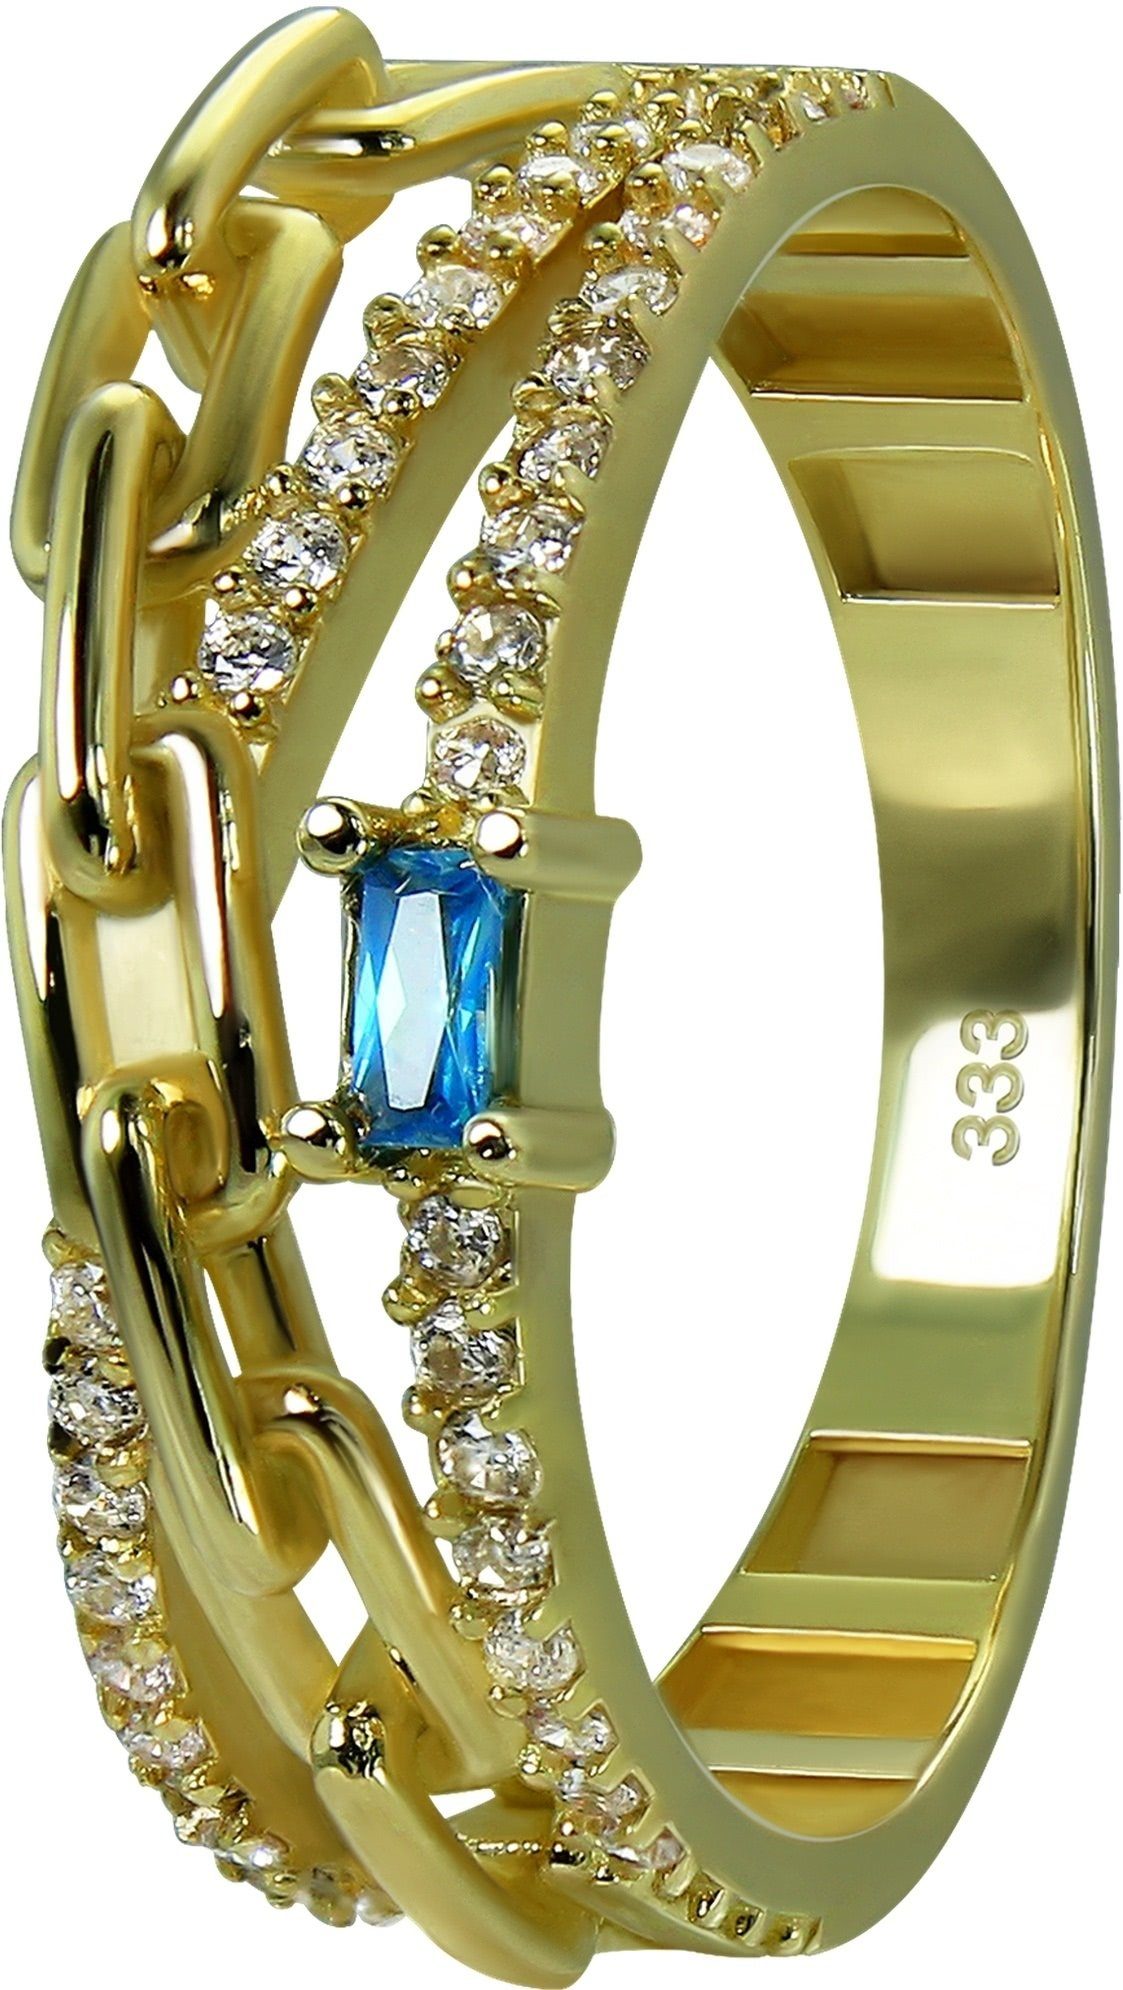 GoldDream Goldring GoldDream Gold Ring Glamour Gr.58 (Fingerring), Damen Ring Glamour 333 Gelbgold - 8 Karat, Farbe: gold, weiß, hellblau